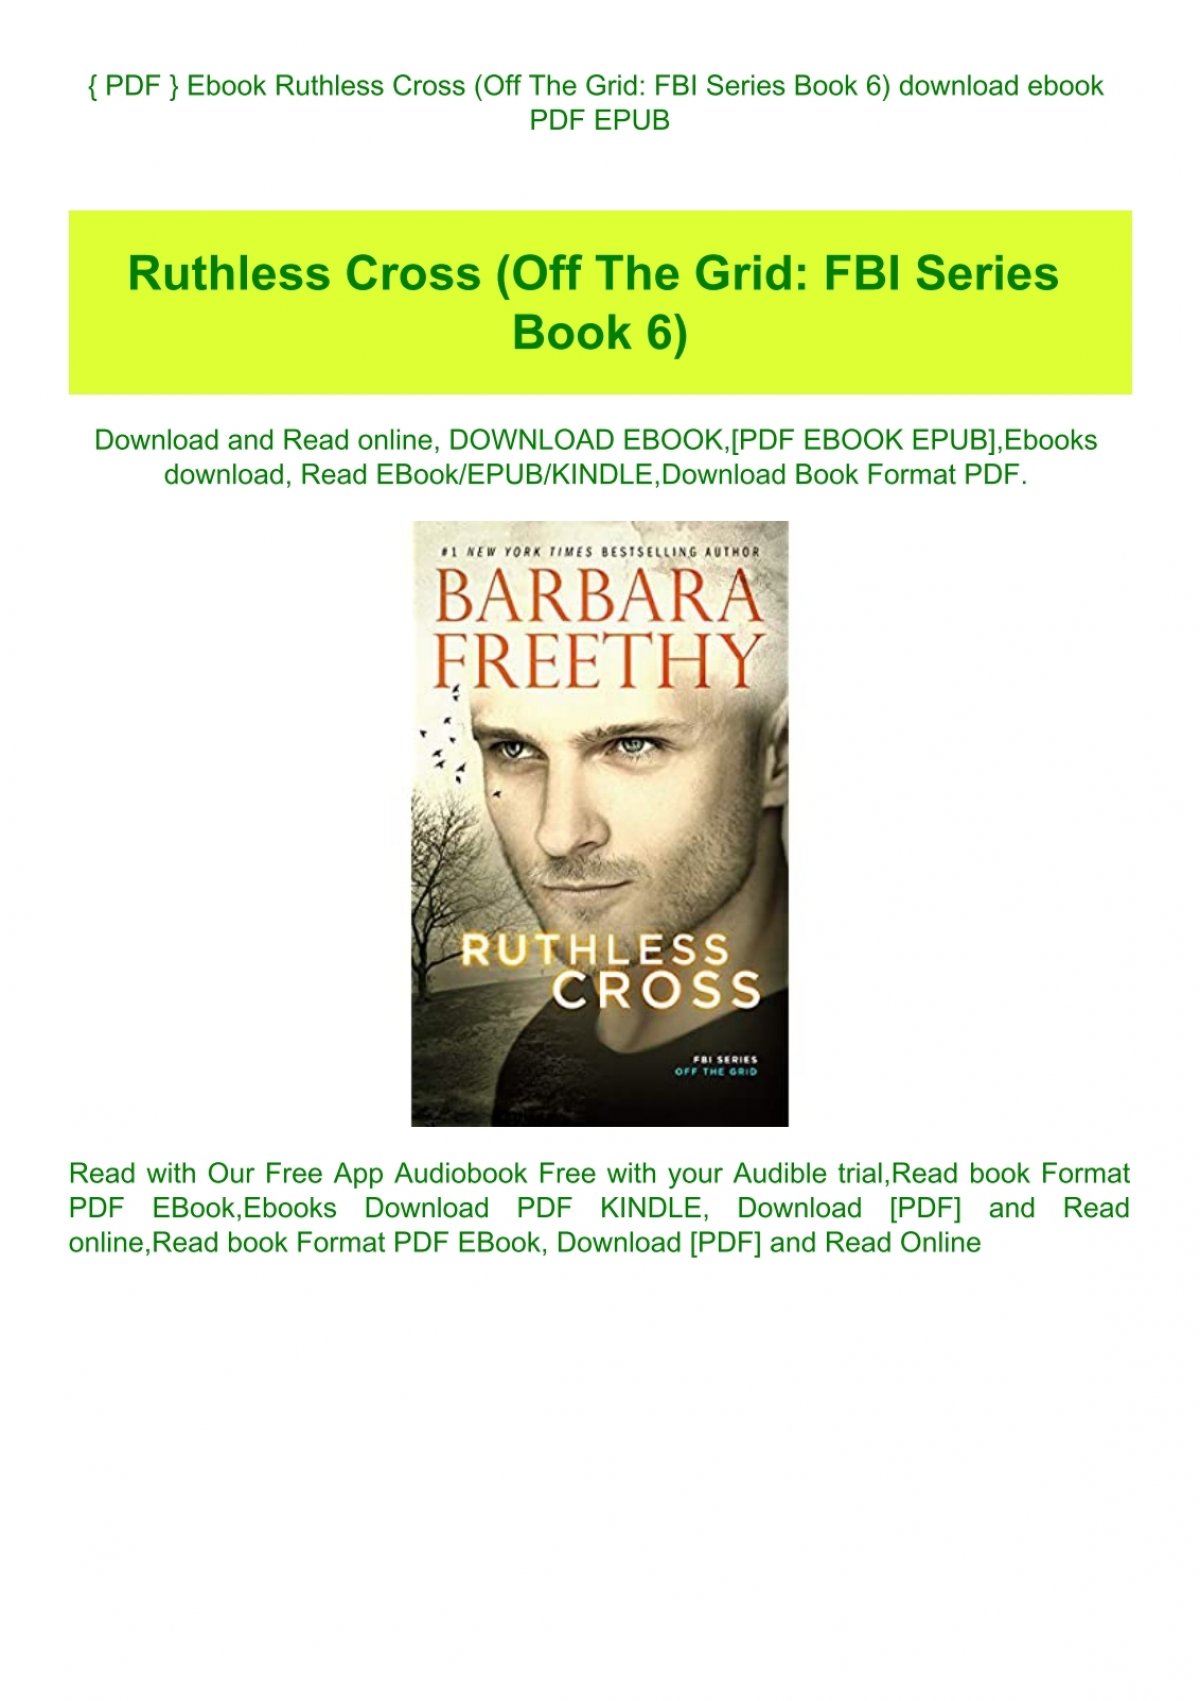 Pdf Ebook Ruthless Cross Off The Grid Fbi Series Book 6 Download Ebook Pdf Epub